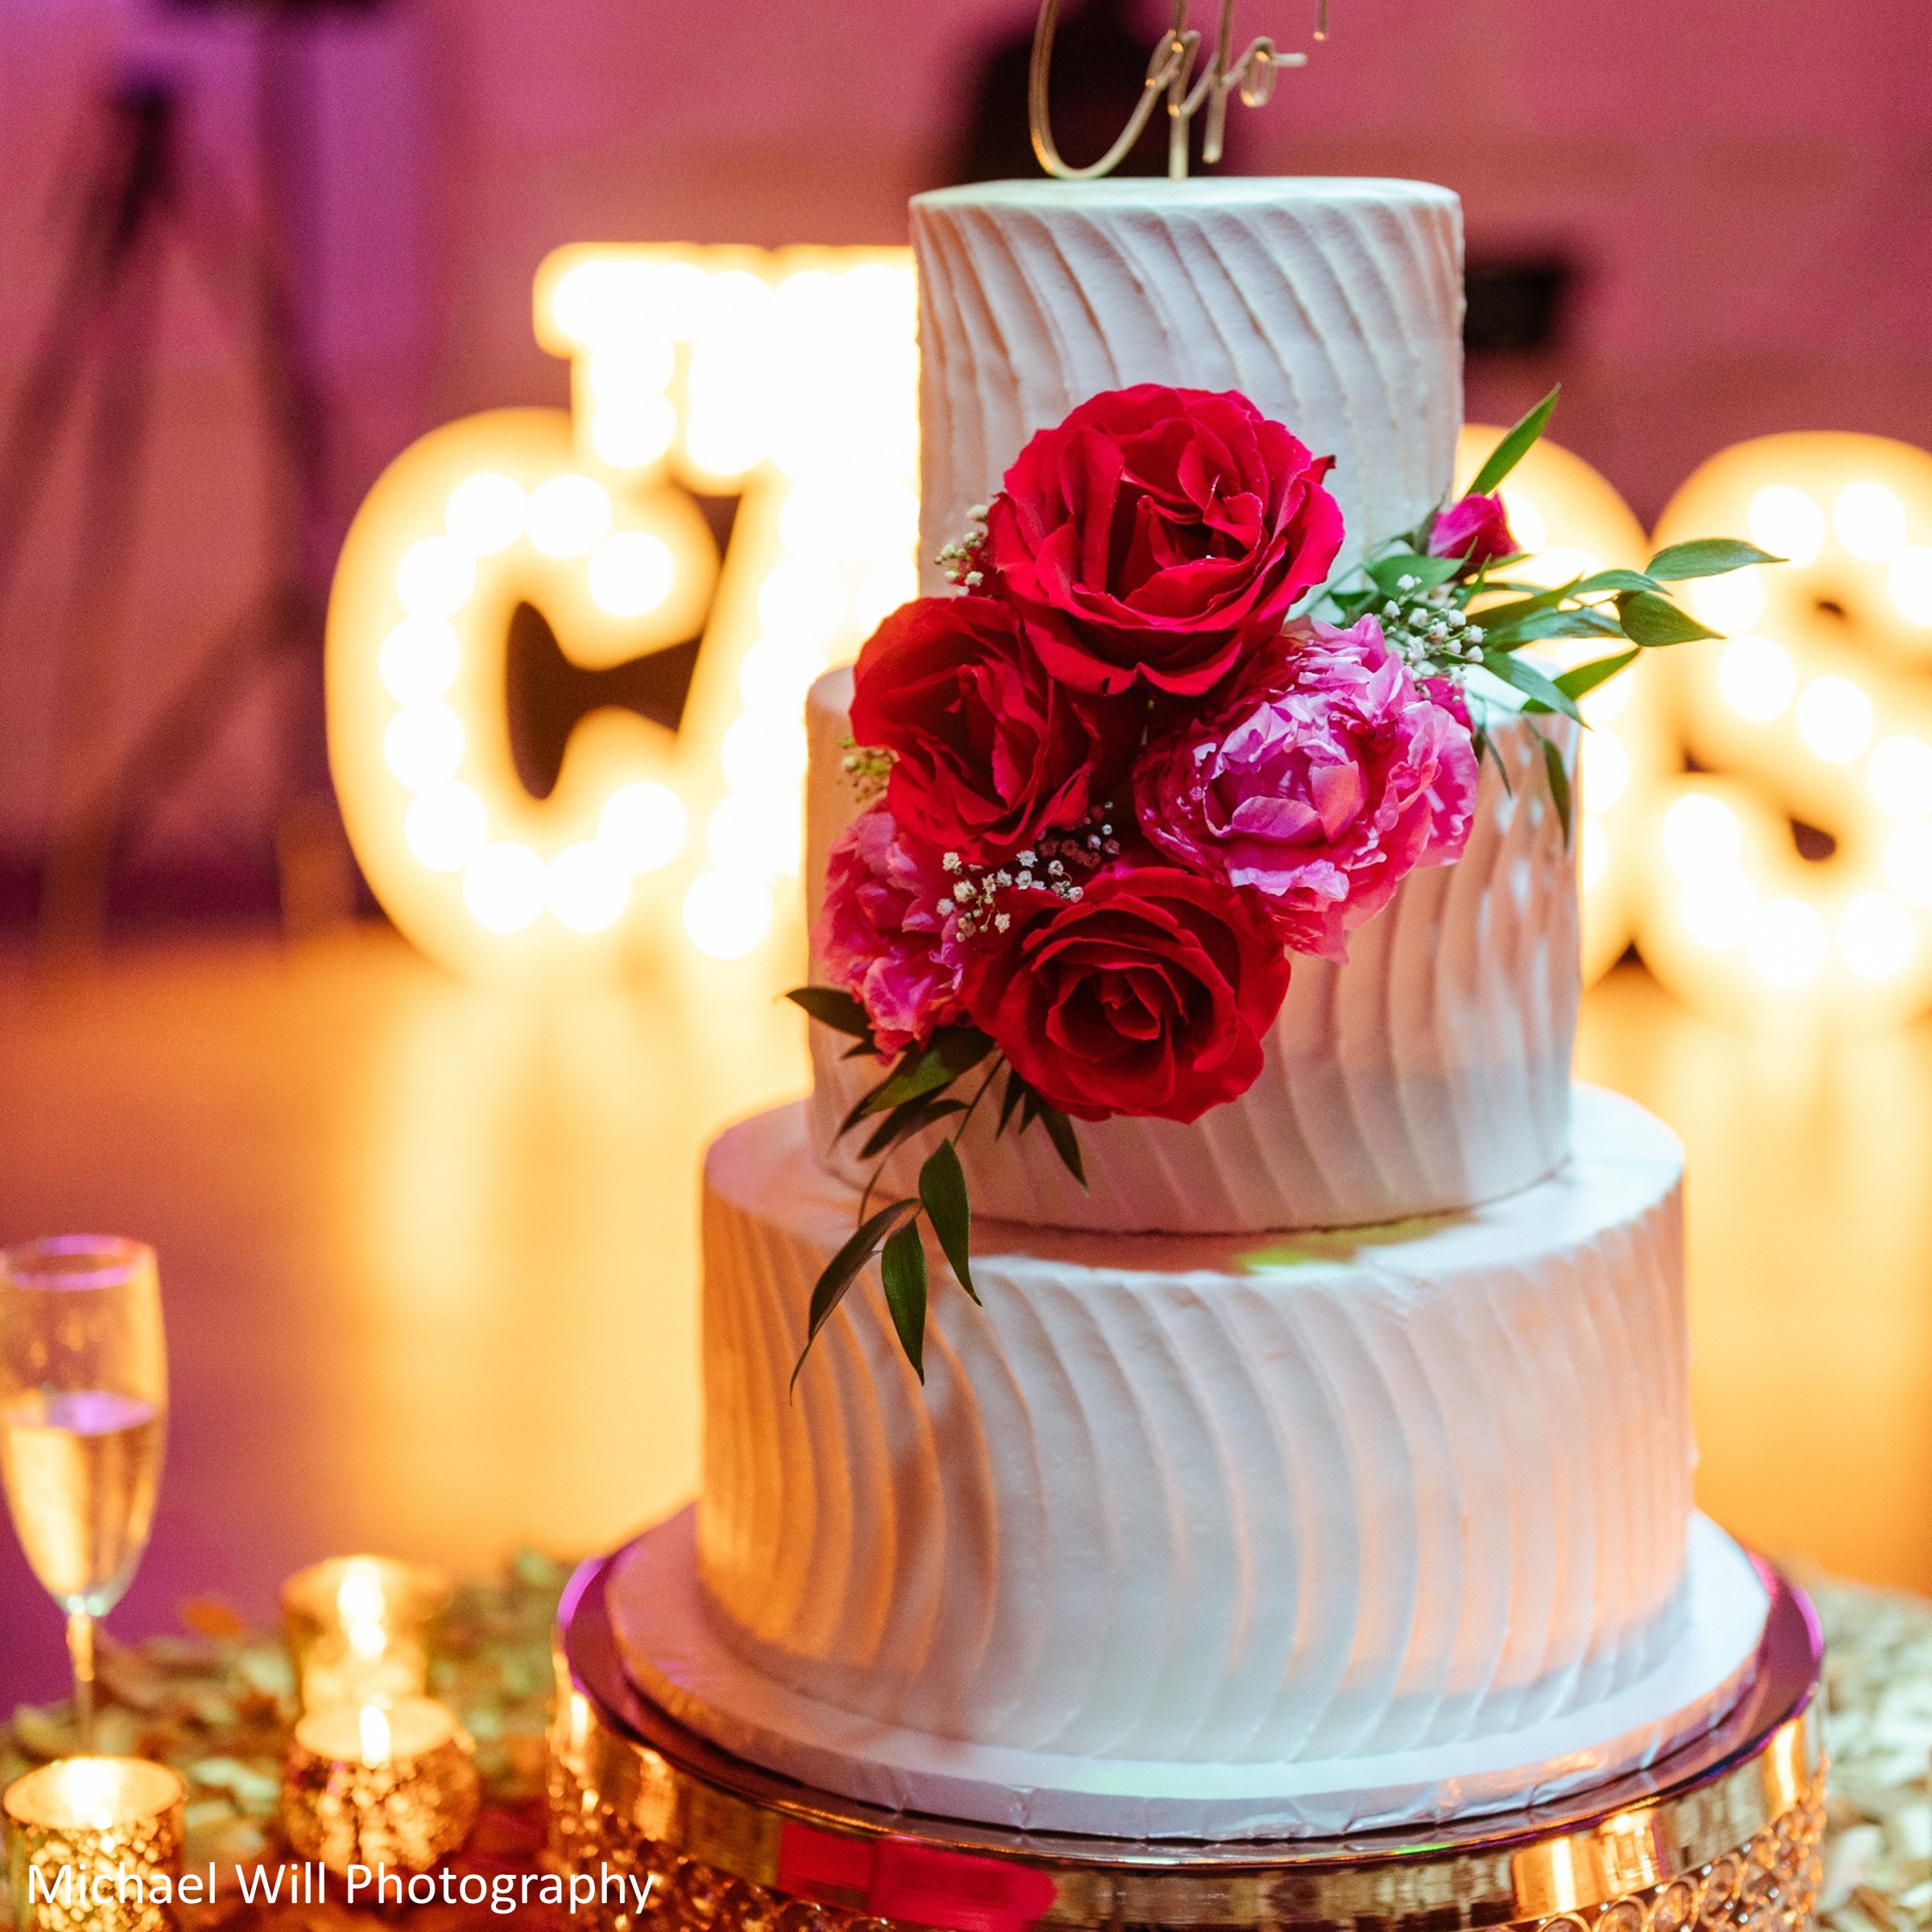 35,900+ Beautiful Birthday Cake Stock Photos, Pictures & Royalty-Free Images  - iStock | Happy birthday, Celebration